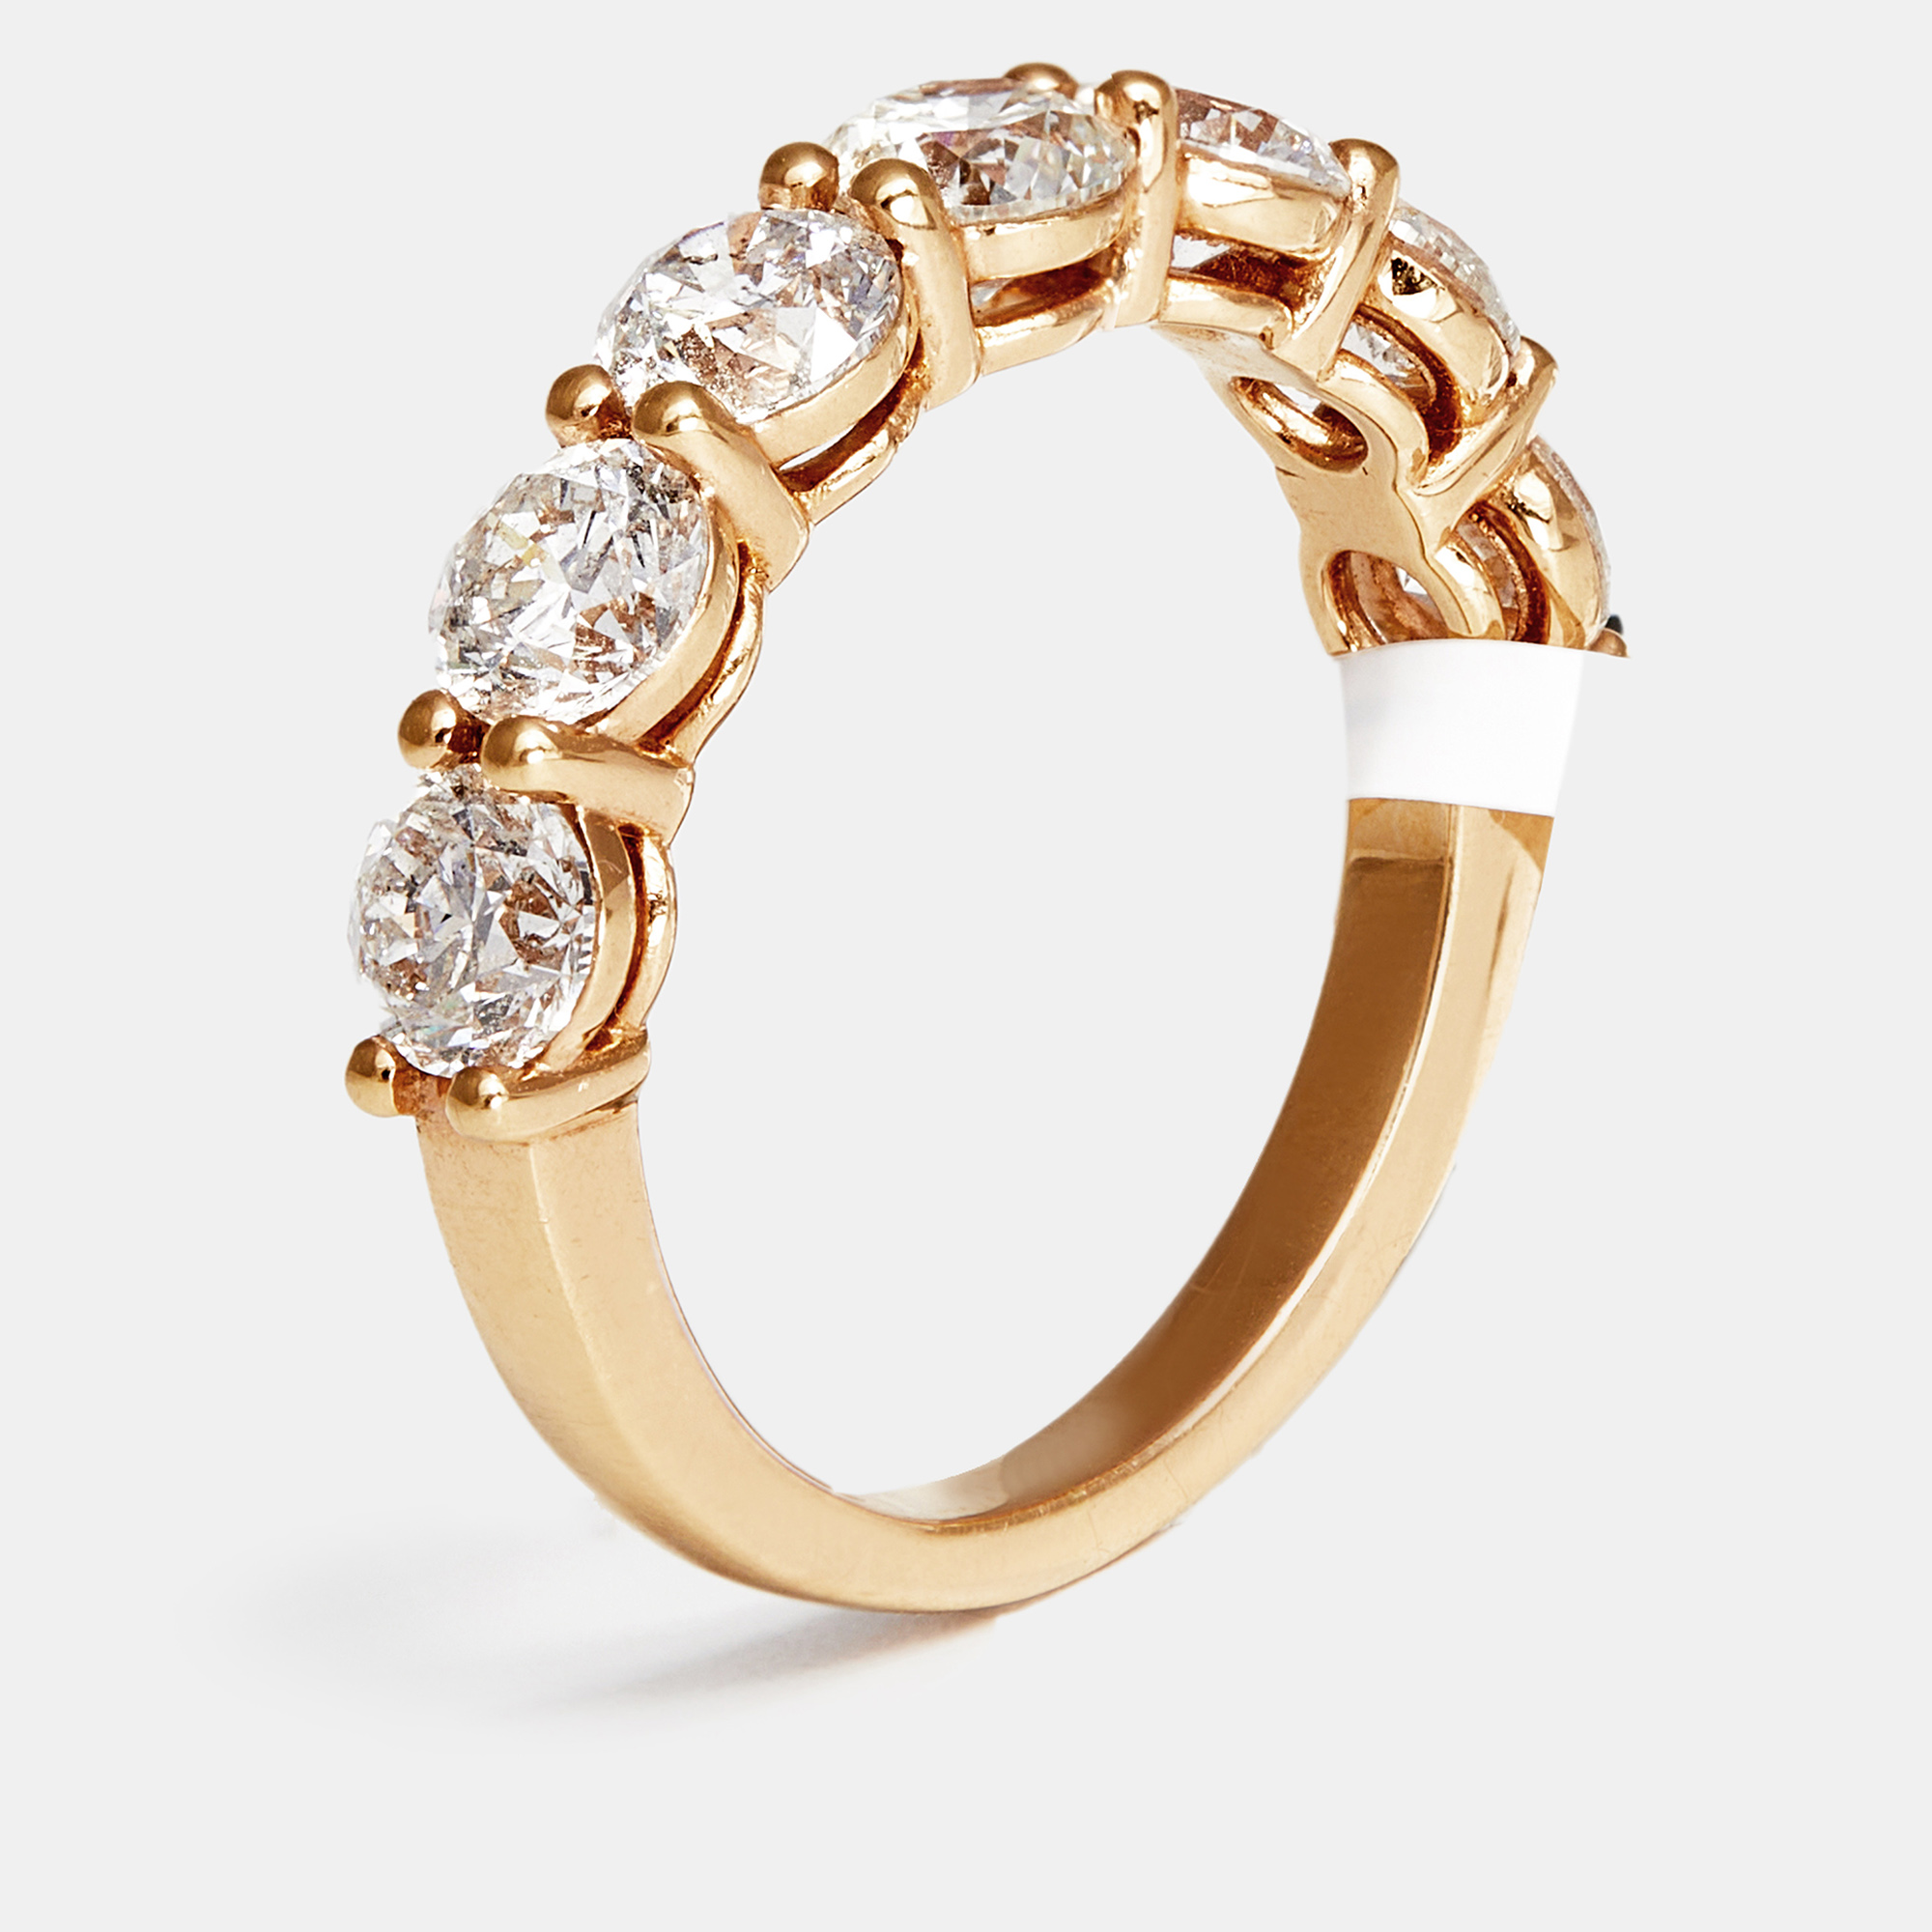 The diamond edit five stone round diamond 2.88 ct 18k rose gold half eternity ring size 54